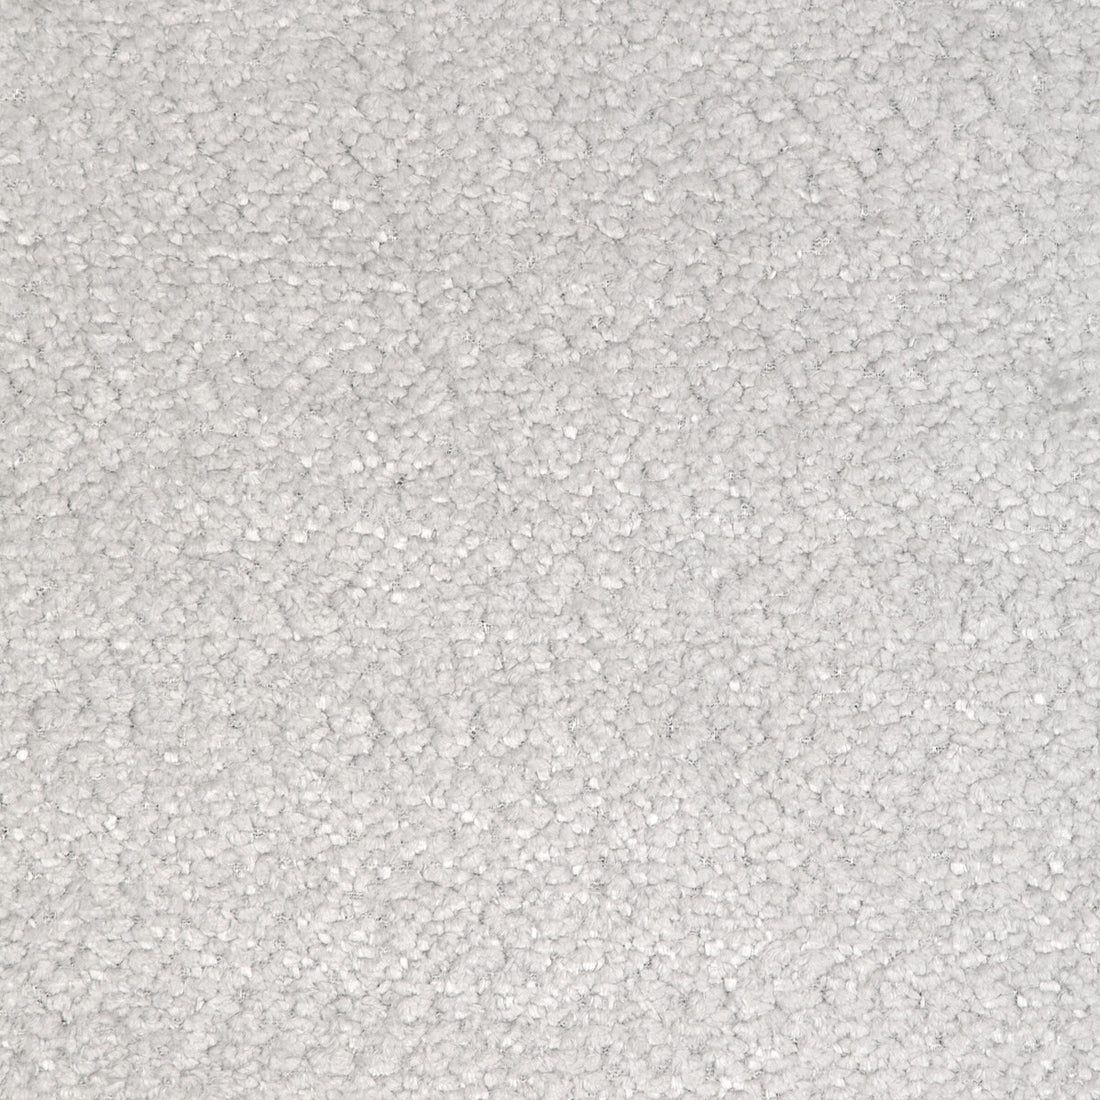 Kravet Smart fabric in 36984-11 color - pattern 36984.11.0 - by Kravet Smart